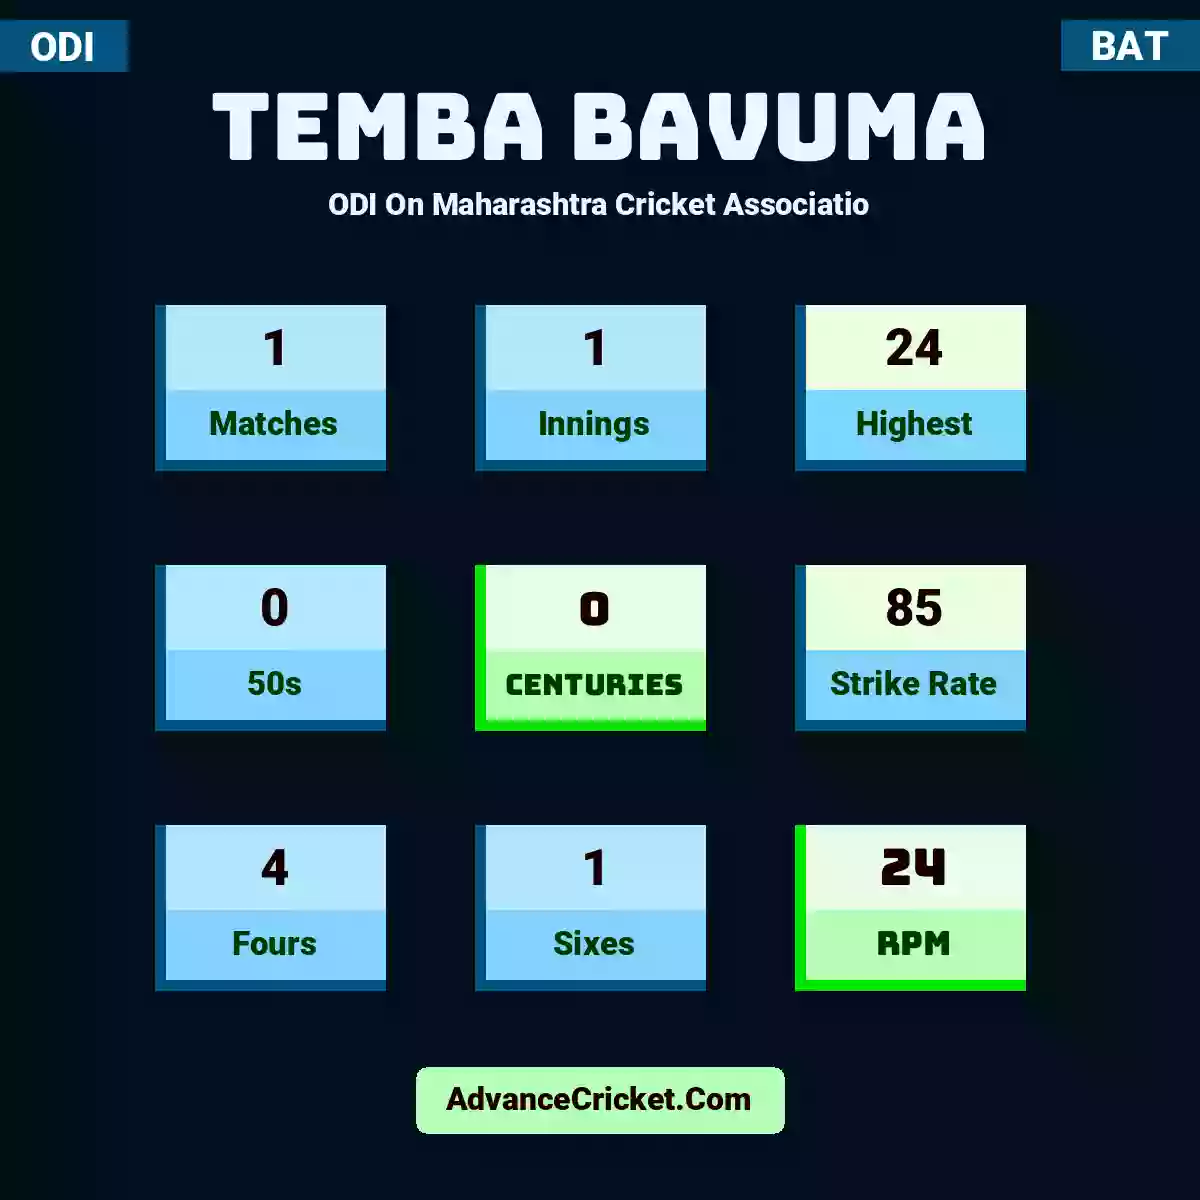 Temba Bavuma ODI  On Maharashtra Cricket Associatio, Temba Bavuma played 1 matches, scored 24 runs as highest, 0 half-centuries, and 0 centuries, with a strike rate of 85. T.Bavuma hit 4 fours and 1 sixes, with an RPM of 24.